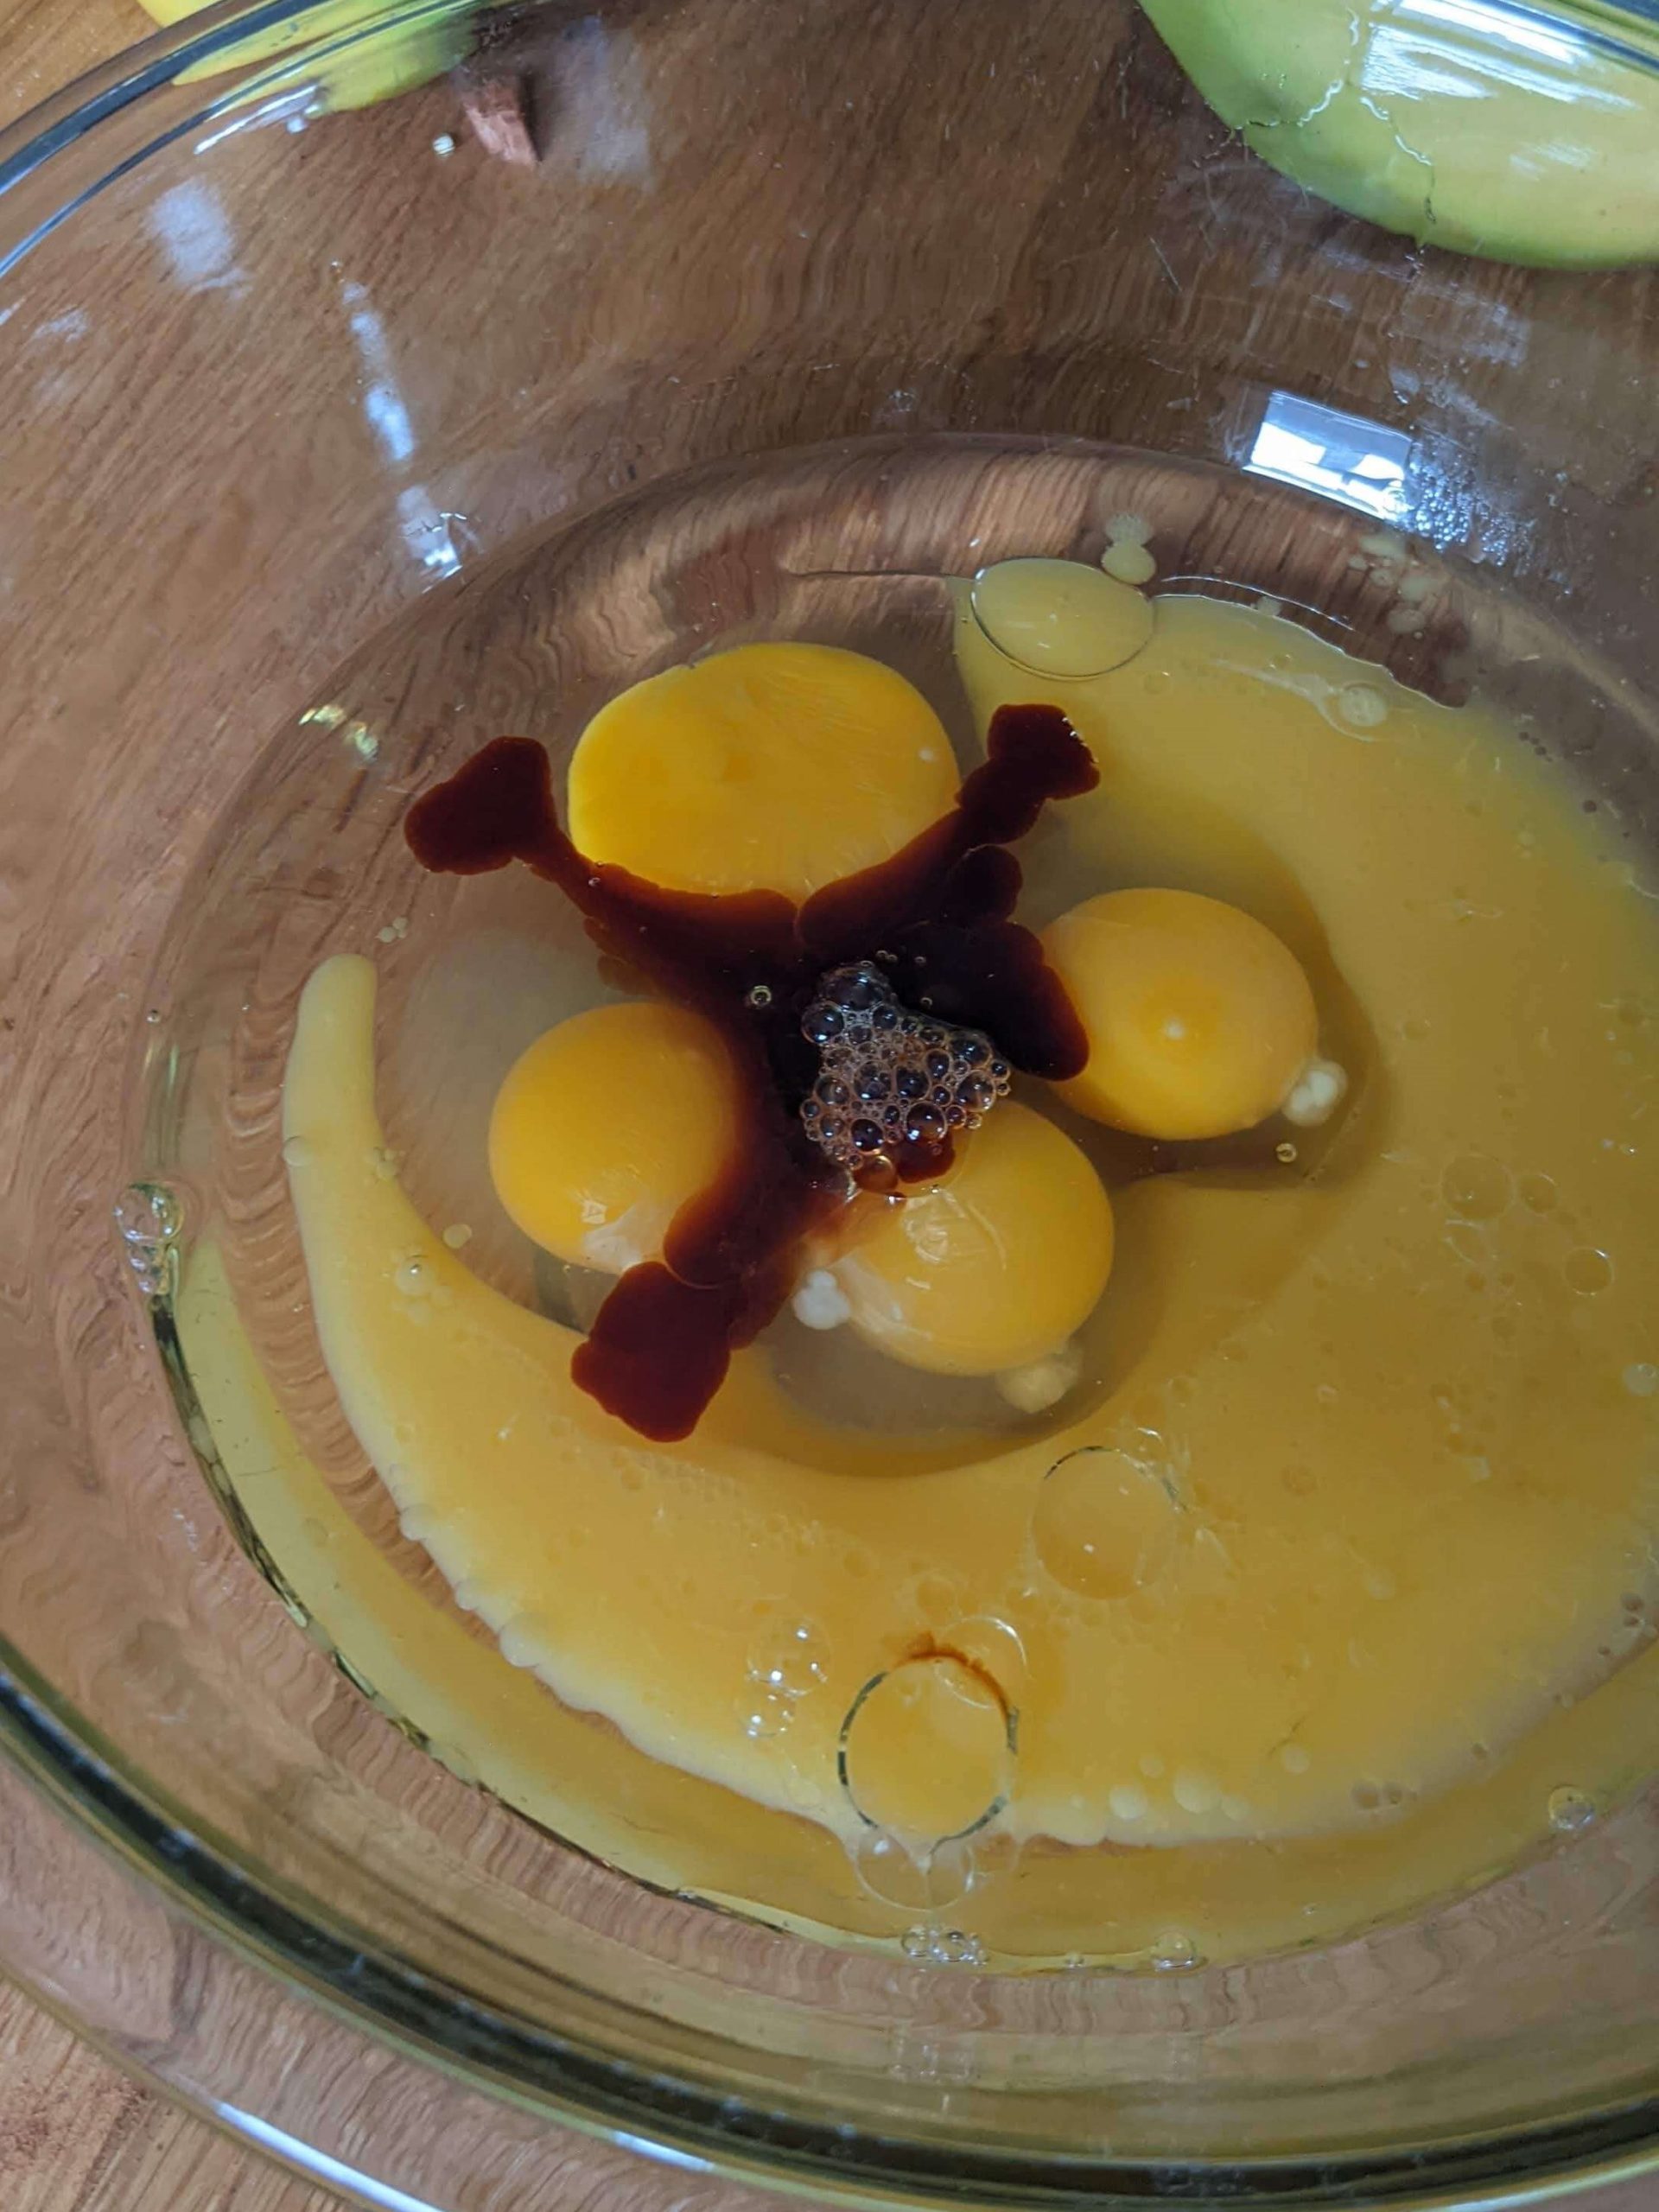 4 eggs and vanilla in a bowl with orange liquid